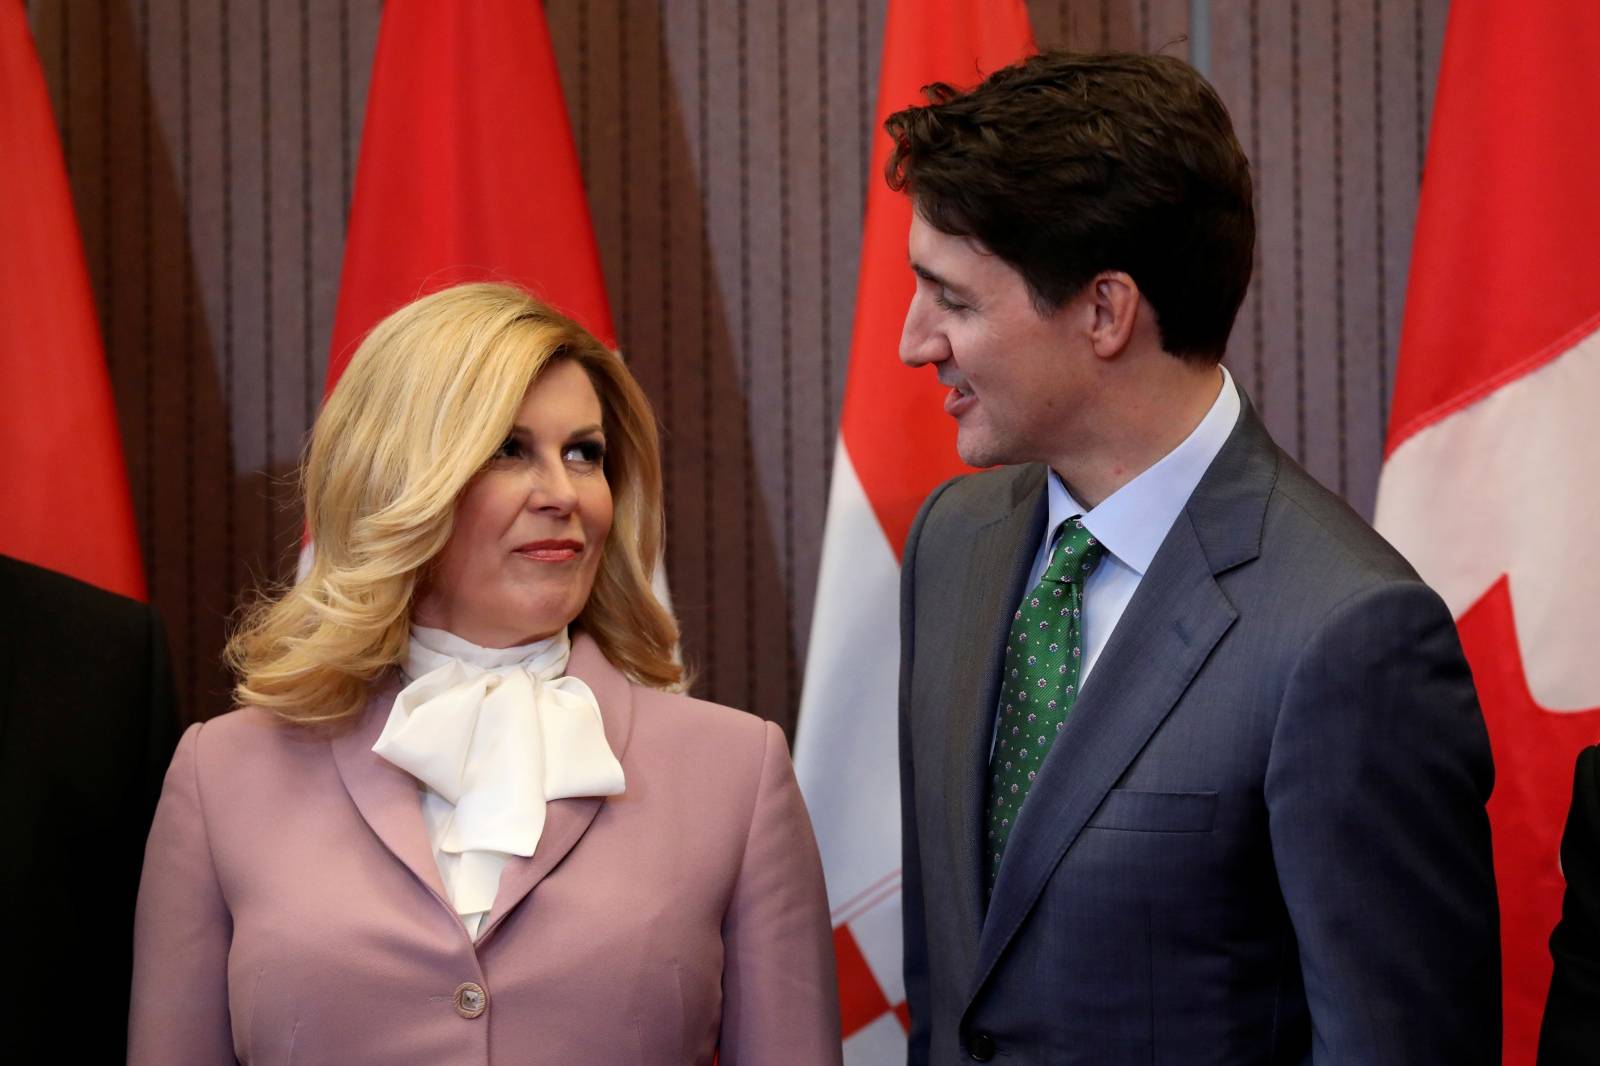 Canada's Prime Minister Justin Trudeau speaks with Croatia's President Kolinda Grabar-Kitarovic on Parliament Hill in Ottawa